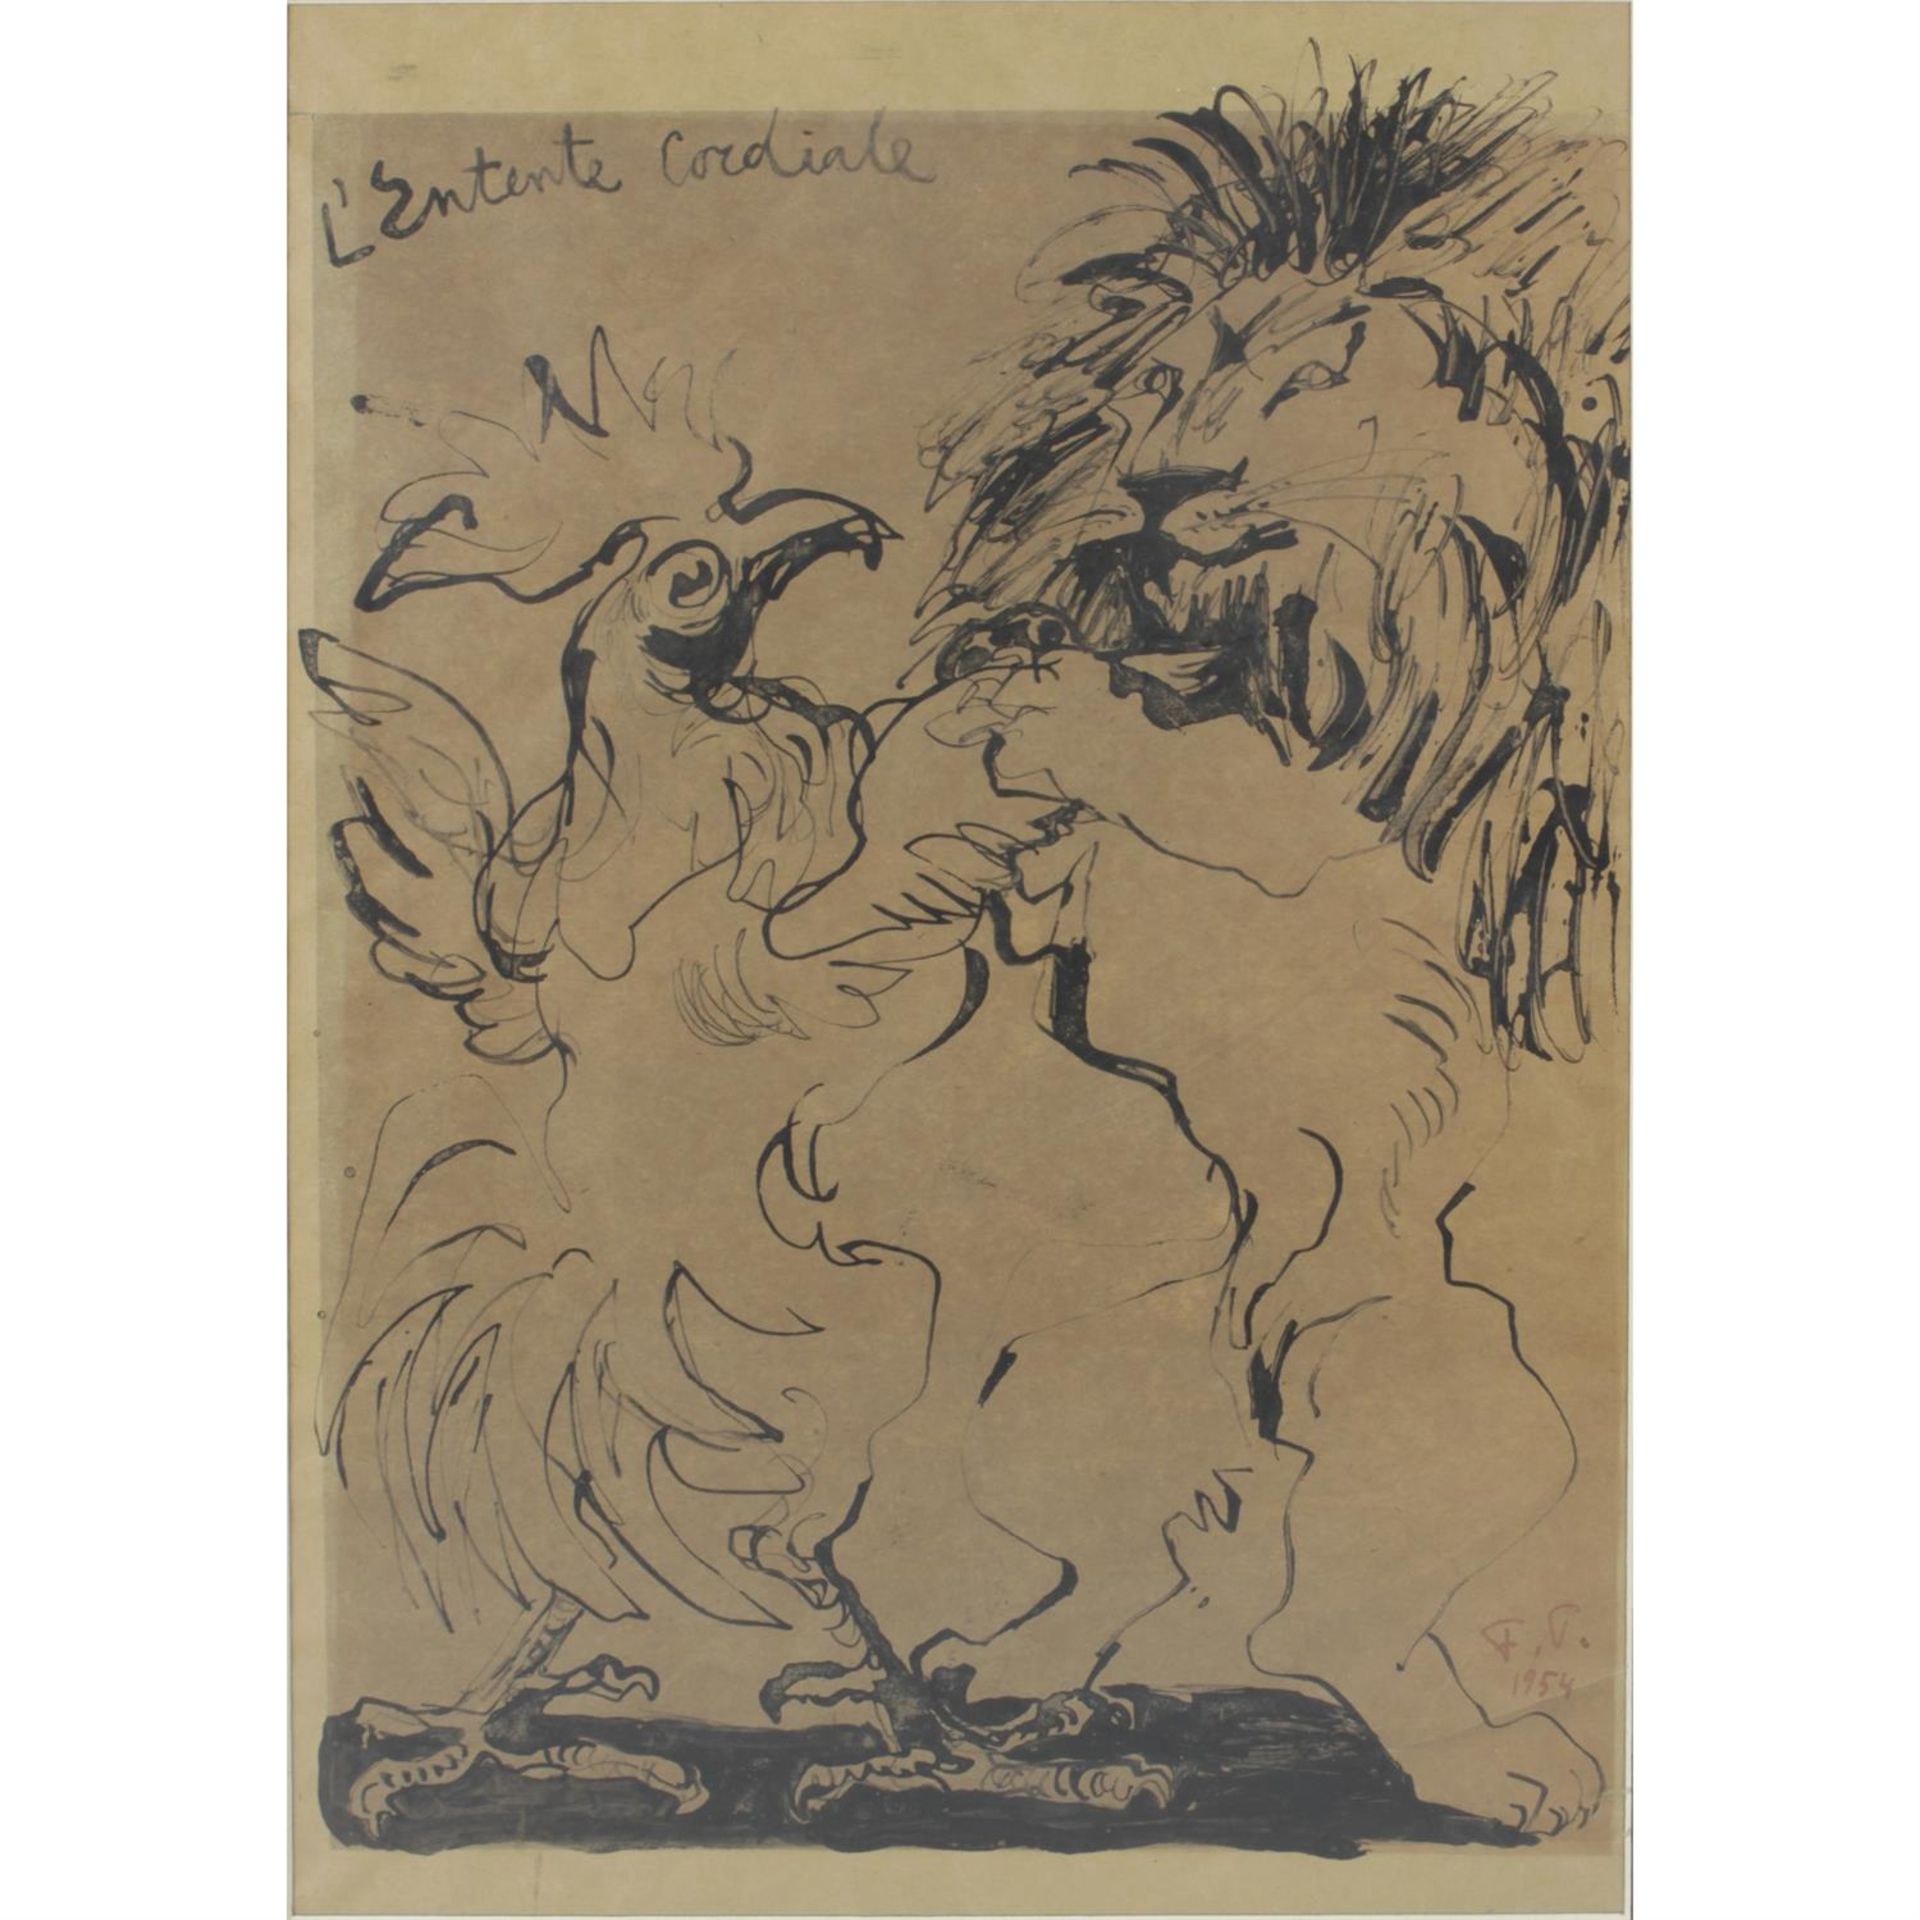 F. Topolski (1907 - 1989), "L'entente Cordiale", framed and glazed book or folio page.